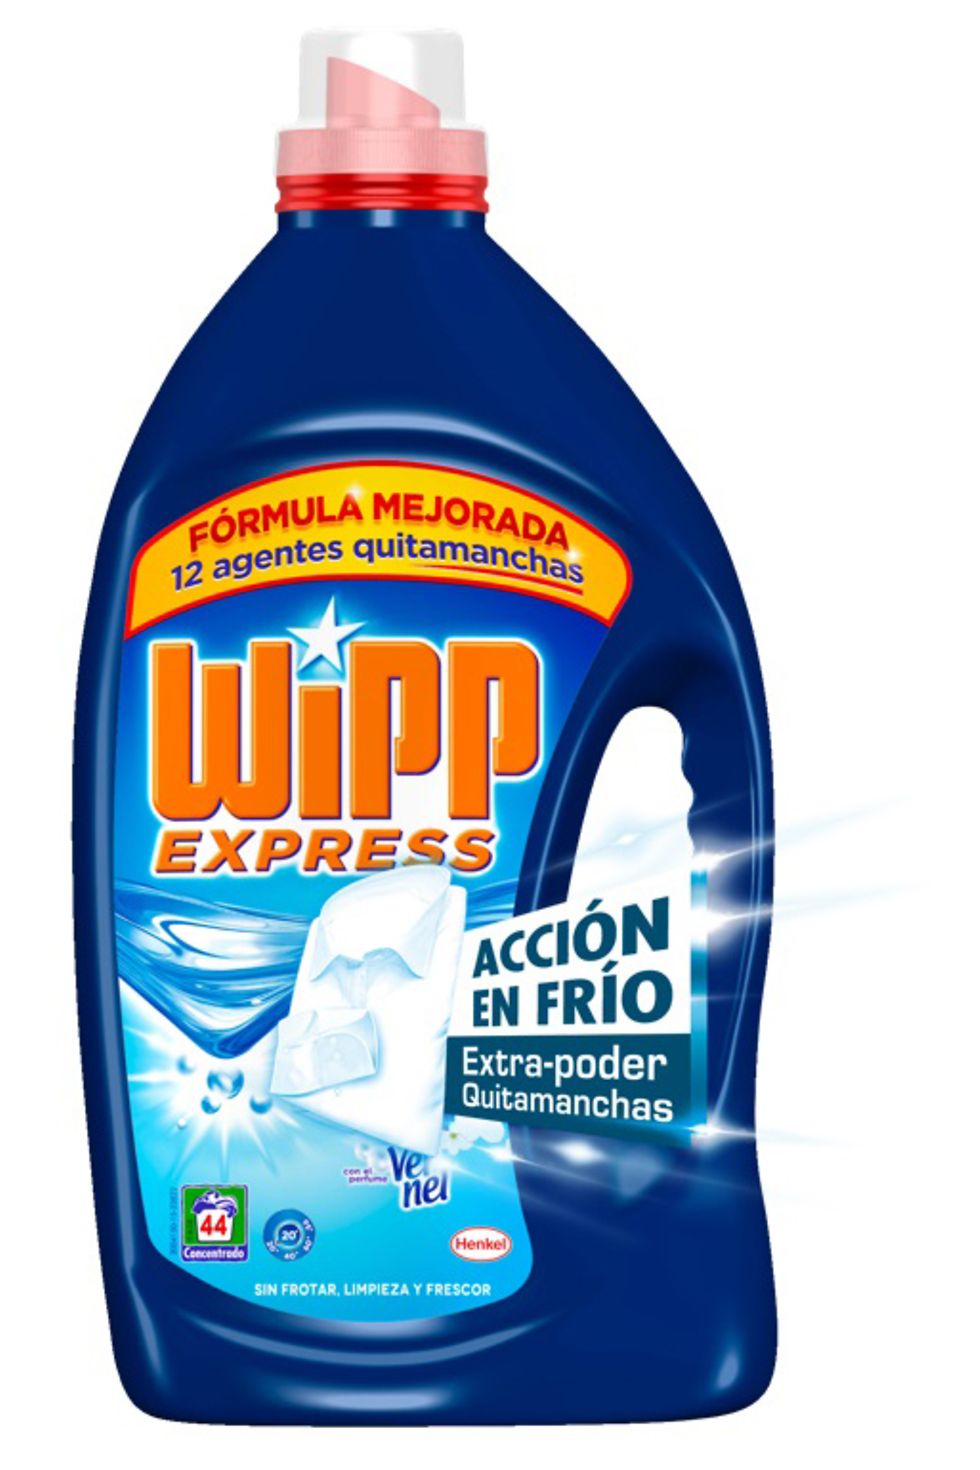 WiPP Express Vernel